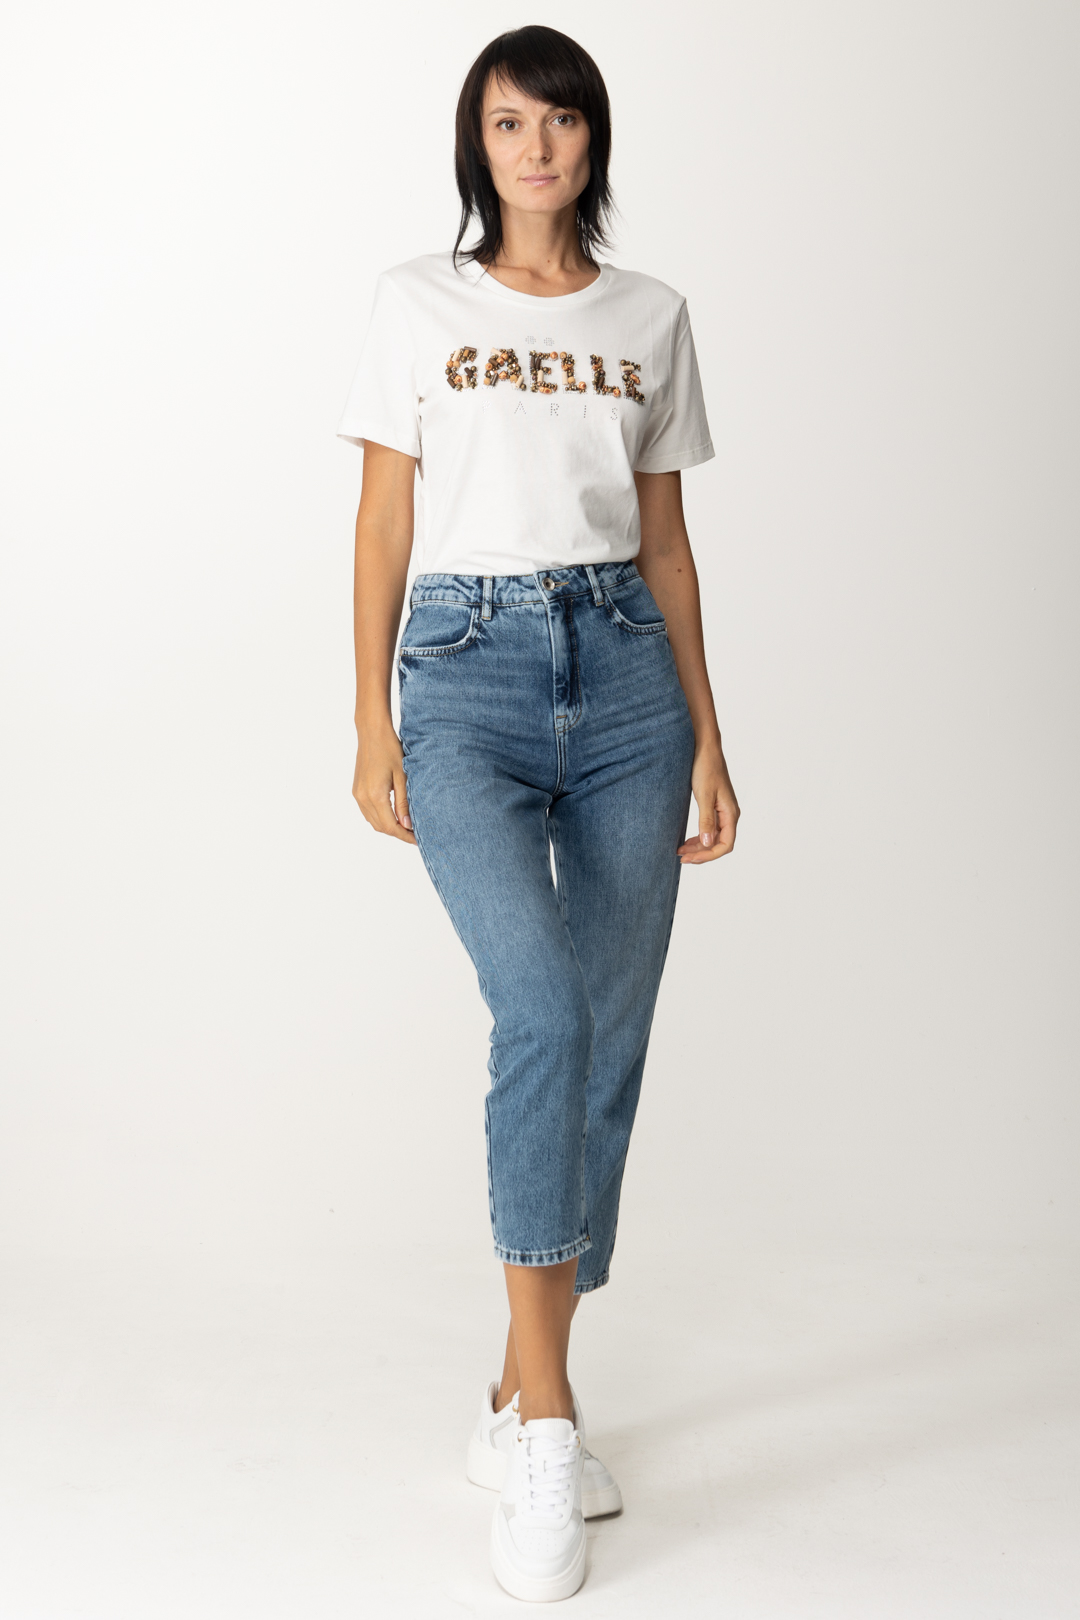 Podgląd: Gaelle Paris T-shirt z haftowanym logo Offwhite